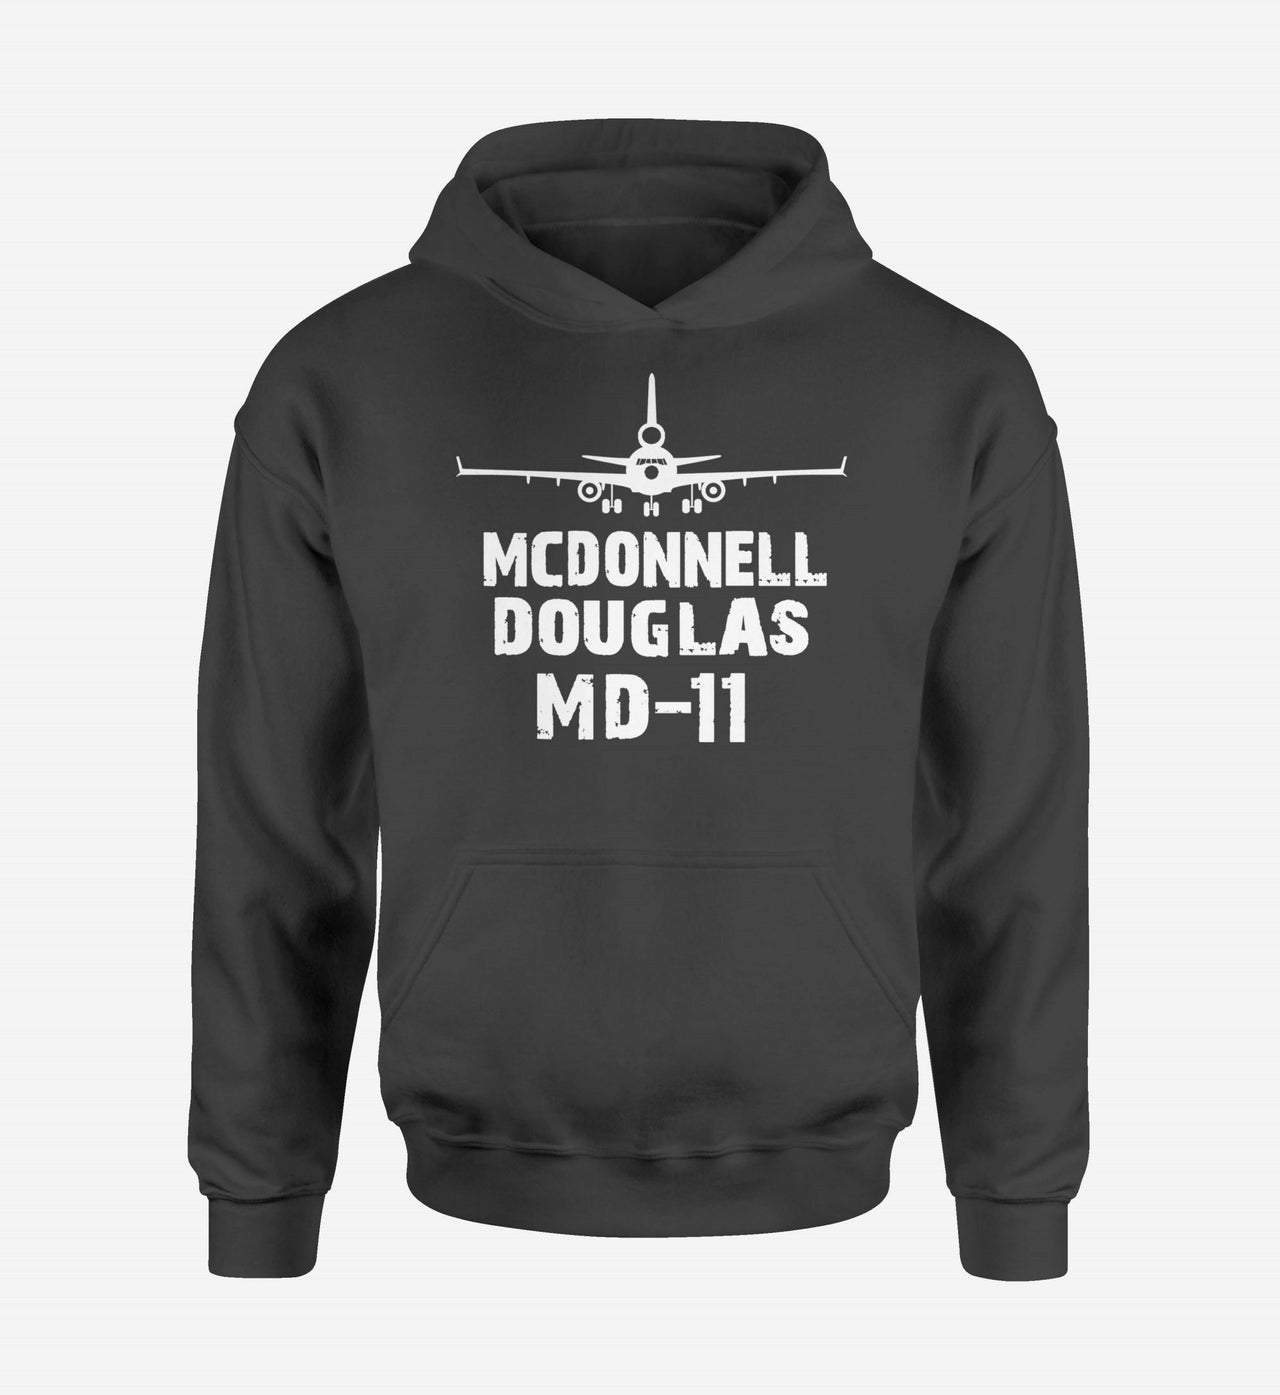 McDonnell Douglas MD-11 & Plane Designed Hoodies